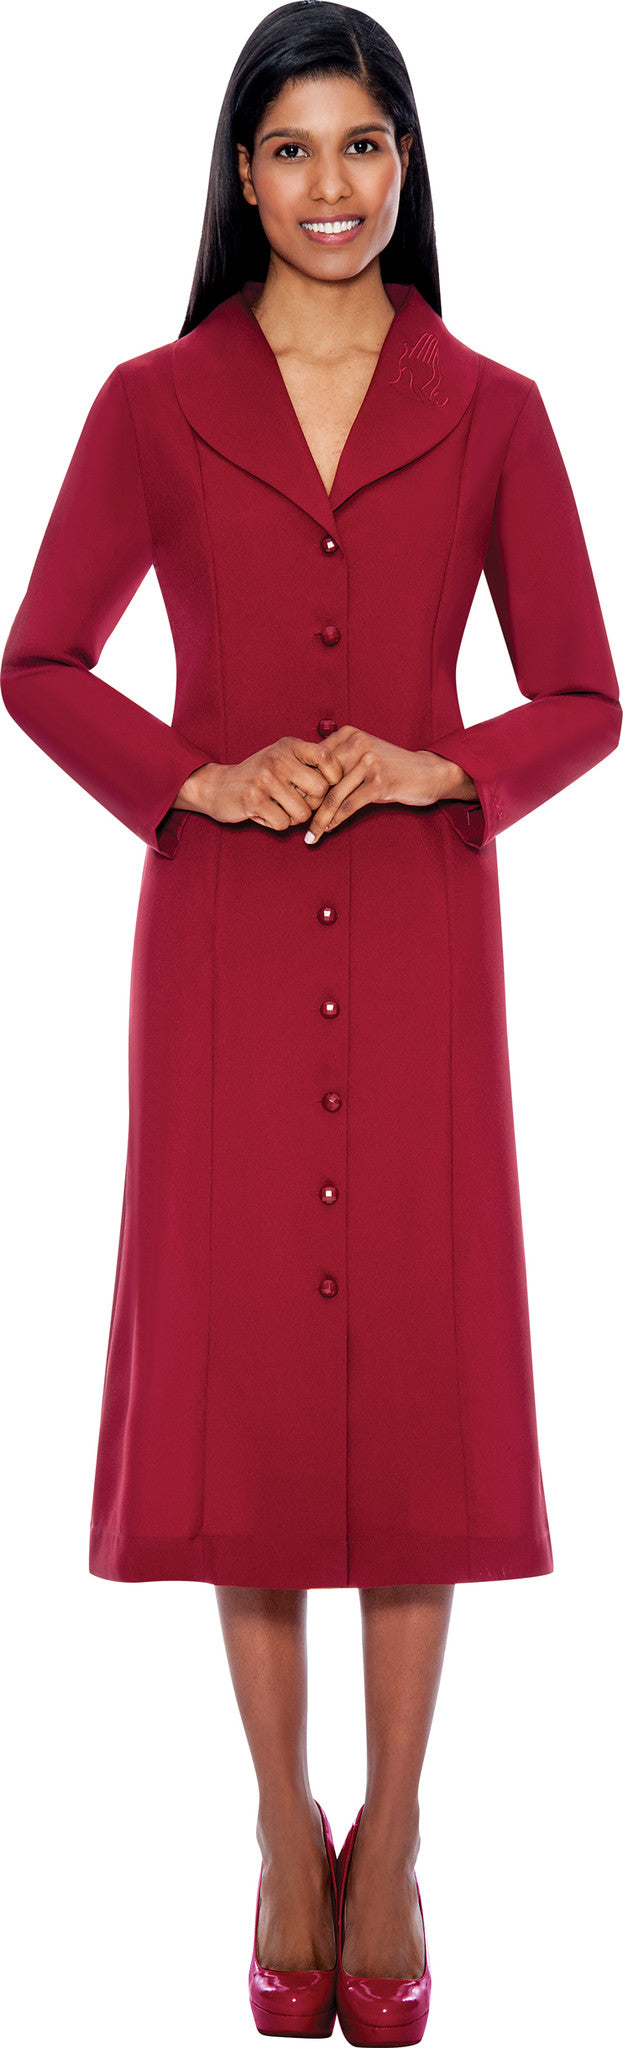 burgundy church dress